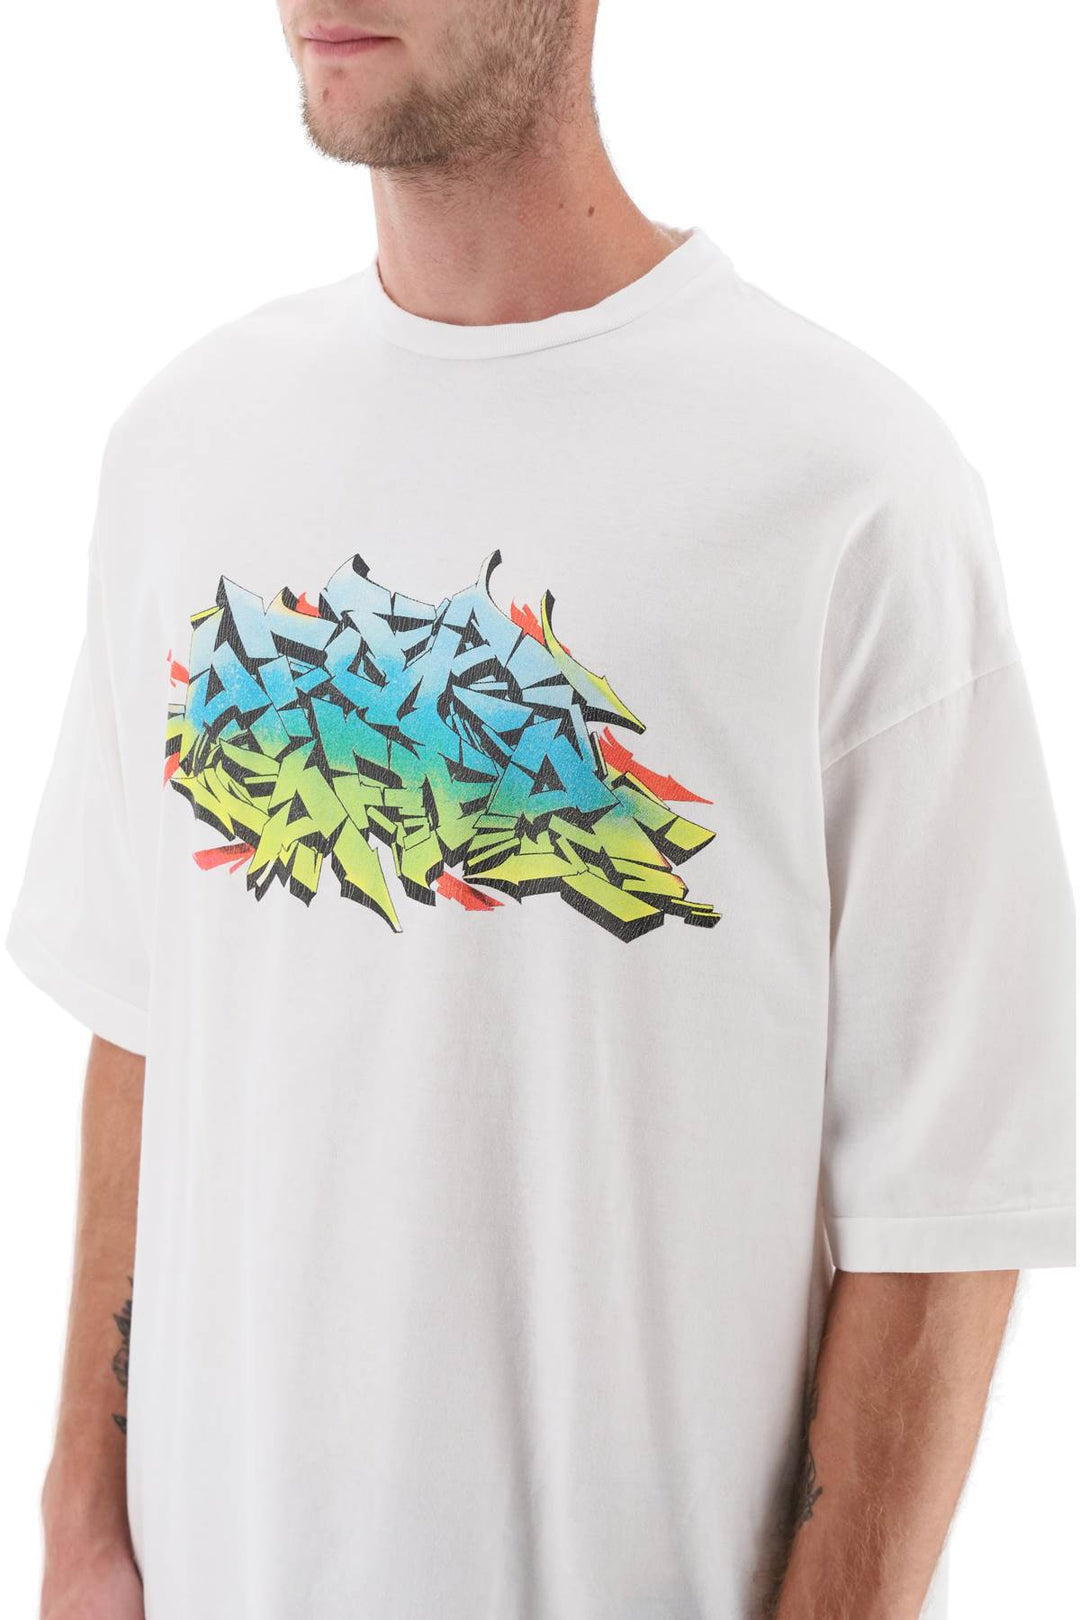 Children of the discordance graffiti print t-shirt-3